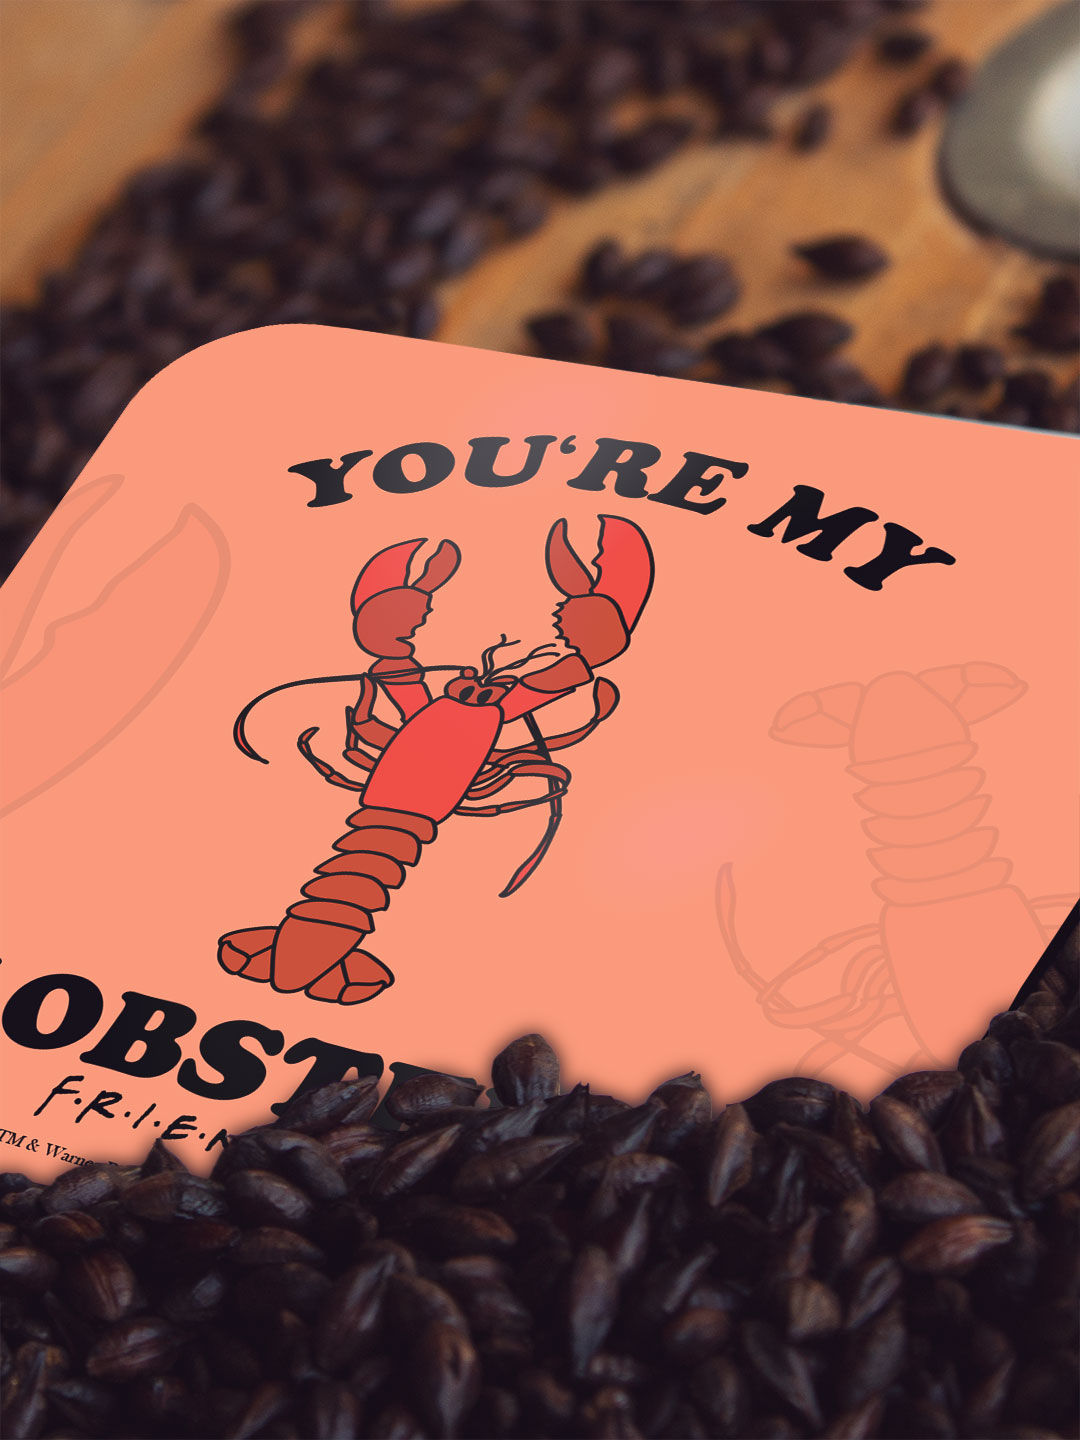 Valentine Lobster - 10 X 10 (cm) Coaster